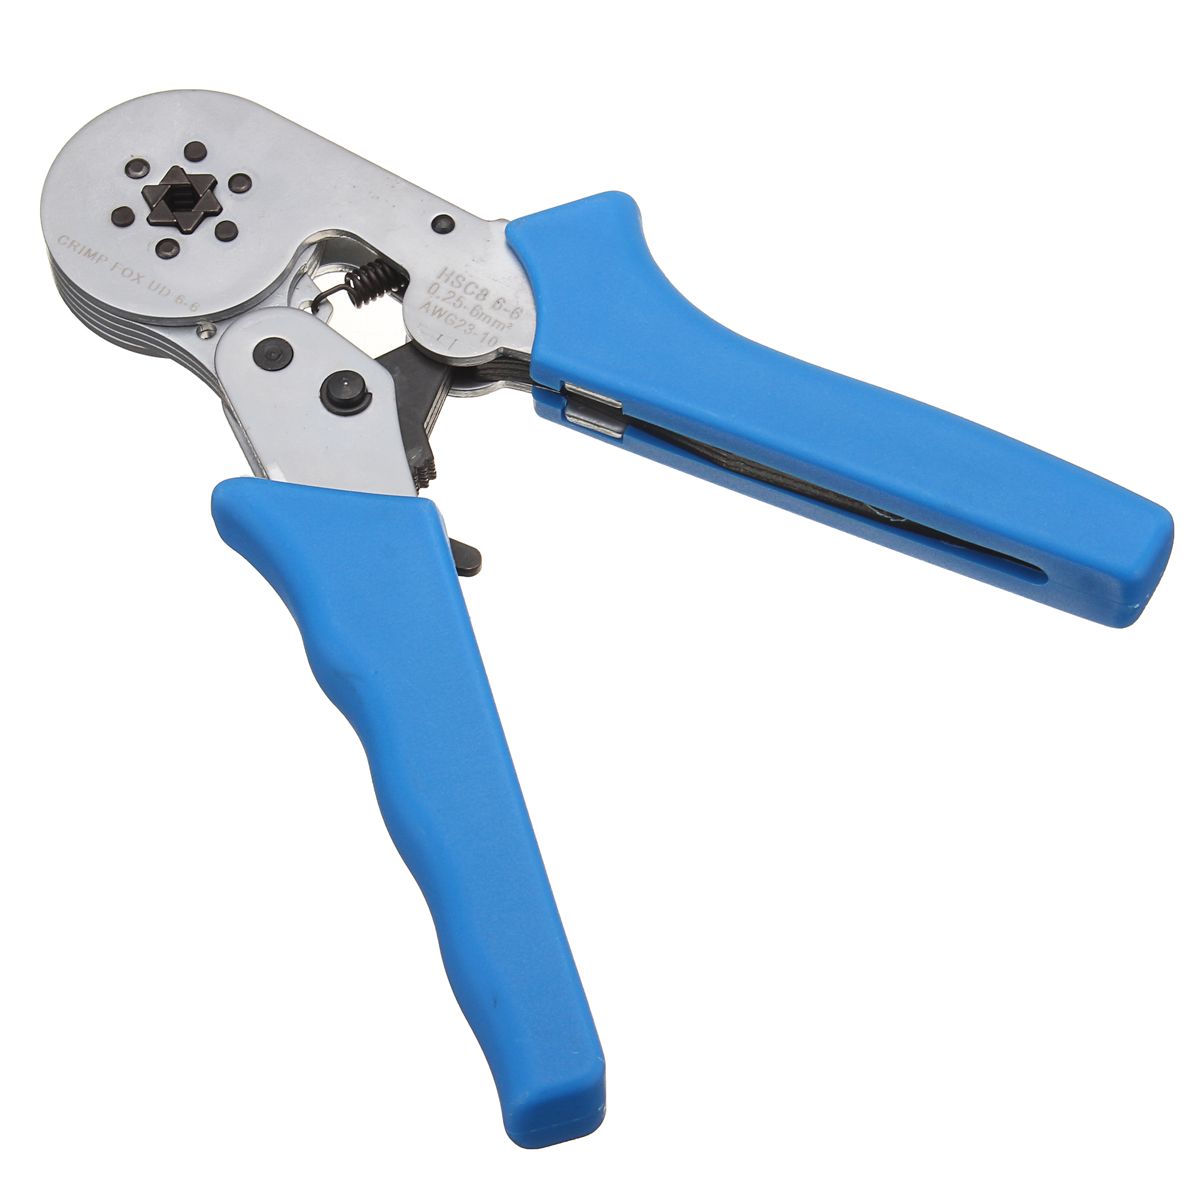 HSC8-6-6-025-60mmsup2-Crimping-Tools-Self-adjustable-Ratcheting-Ferrule-Wire-Crimper-Plier-1168809